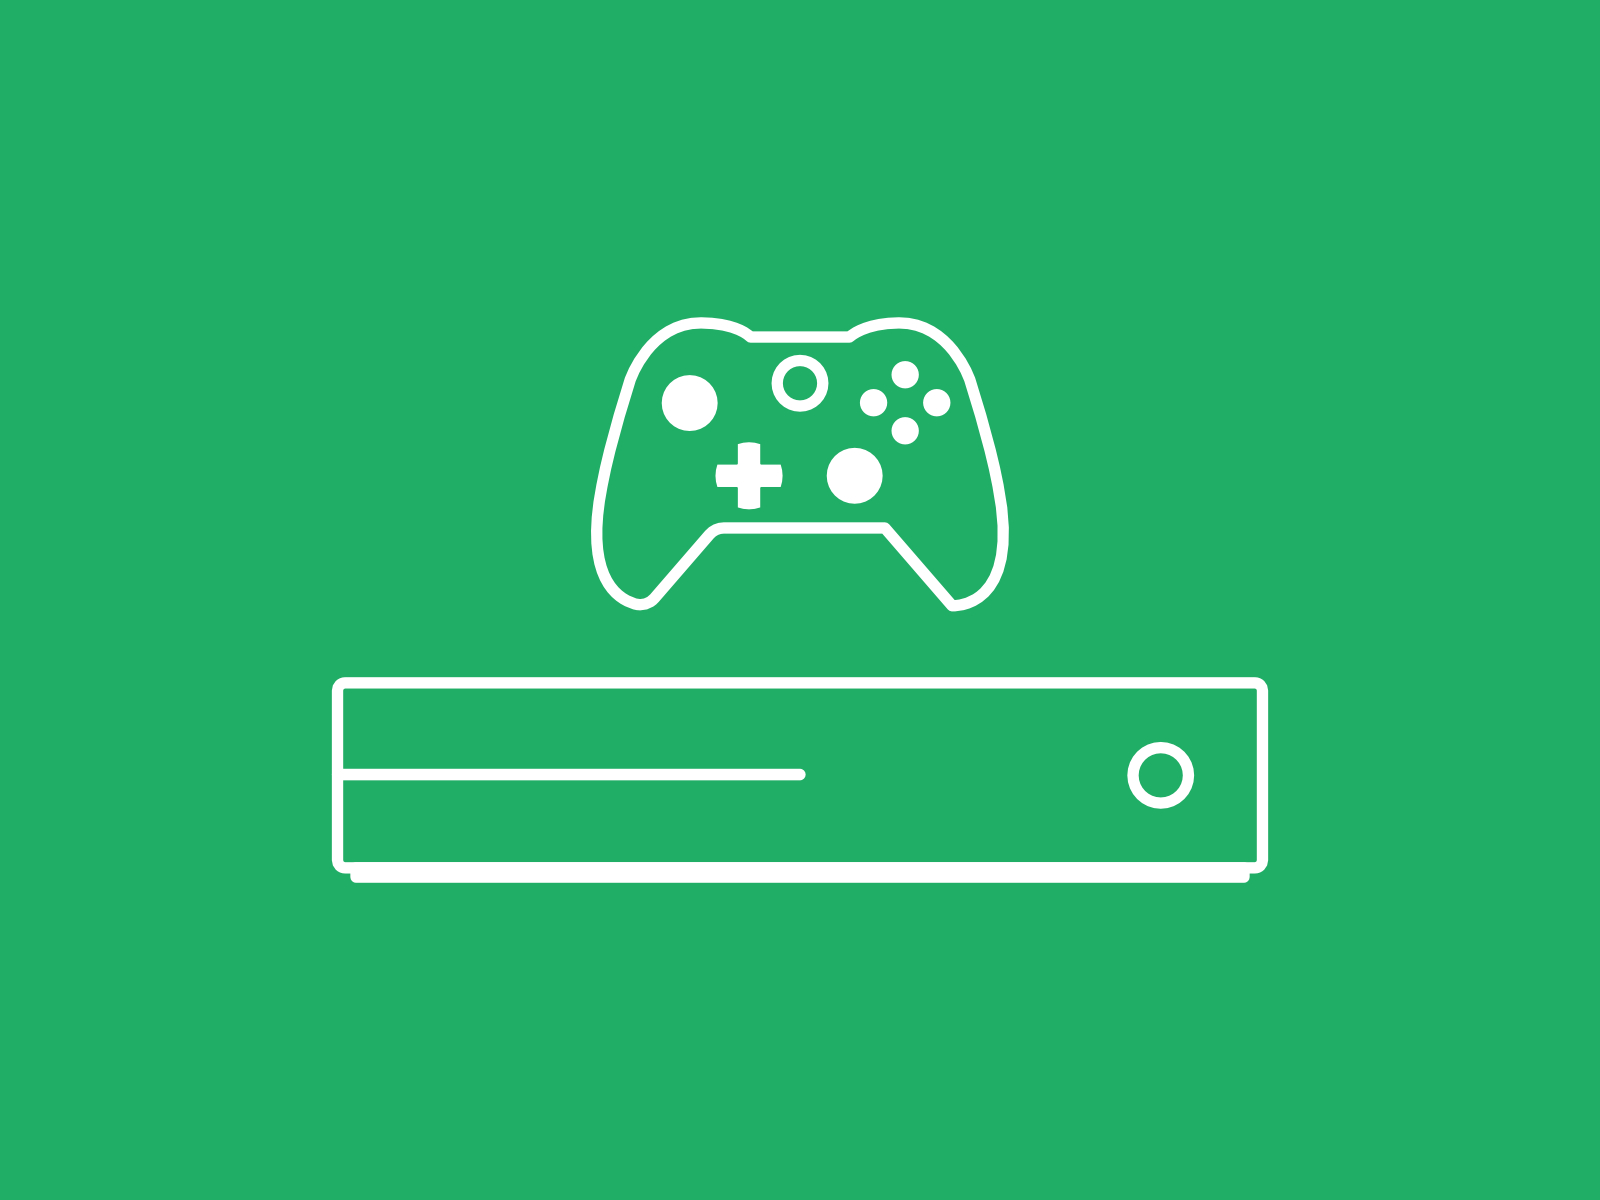 Xbox One Gamepad Icons 